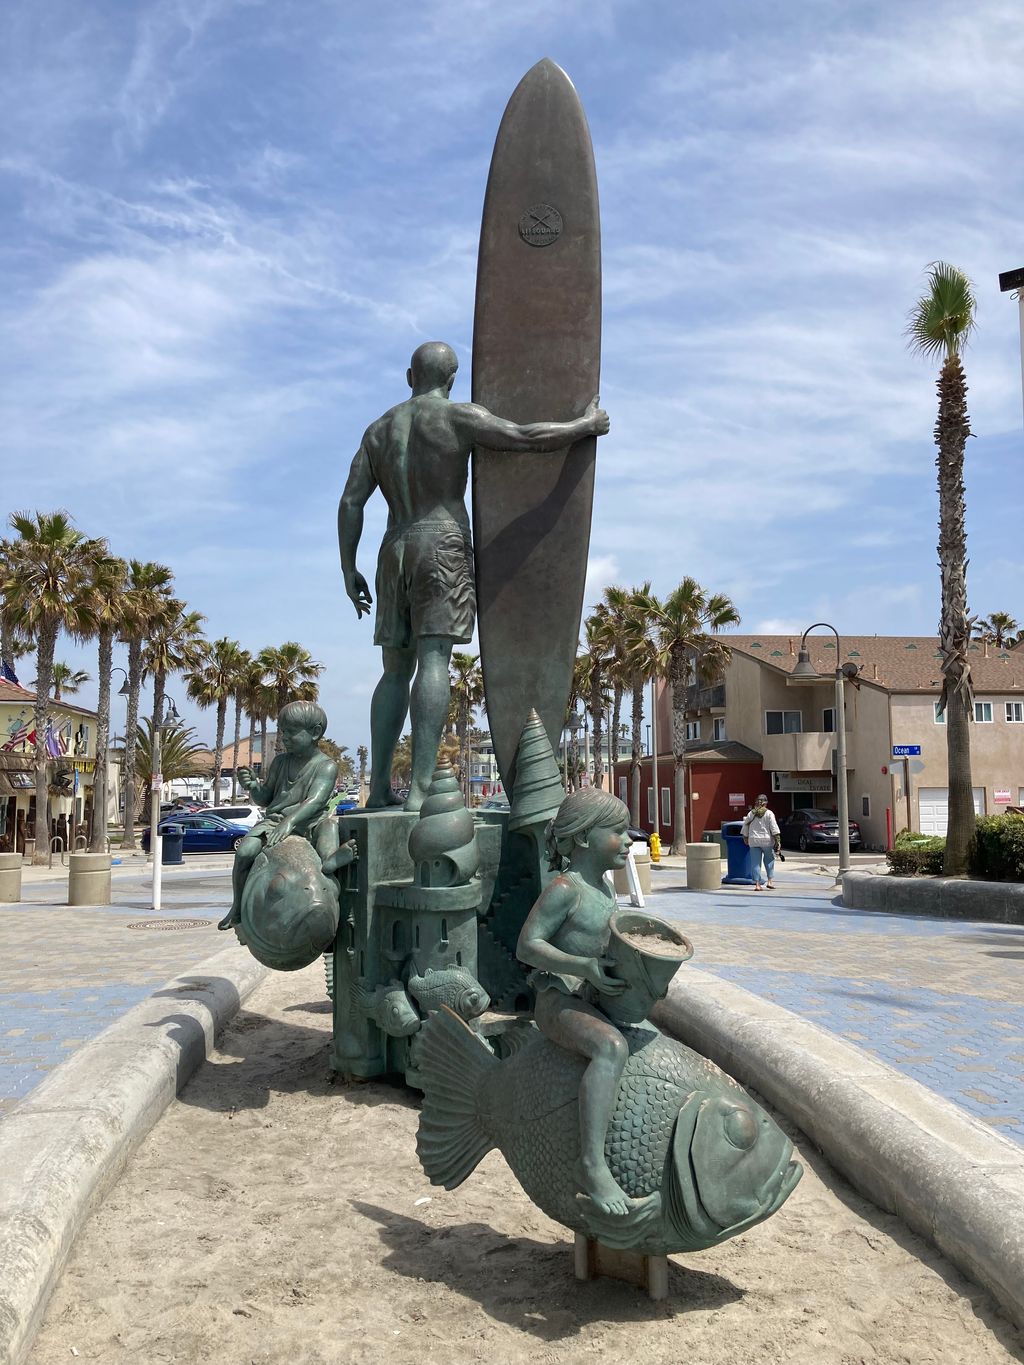 The Spirit of Imperial Beach Statue